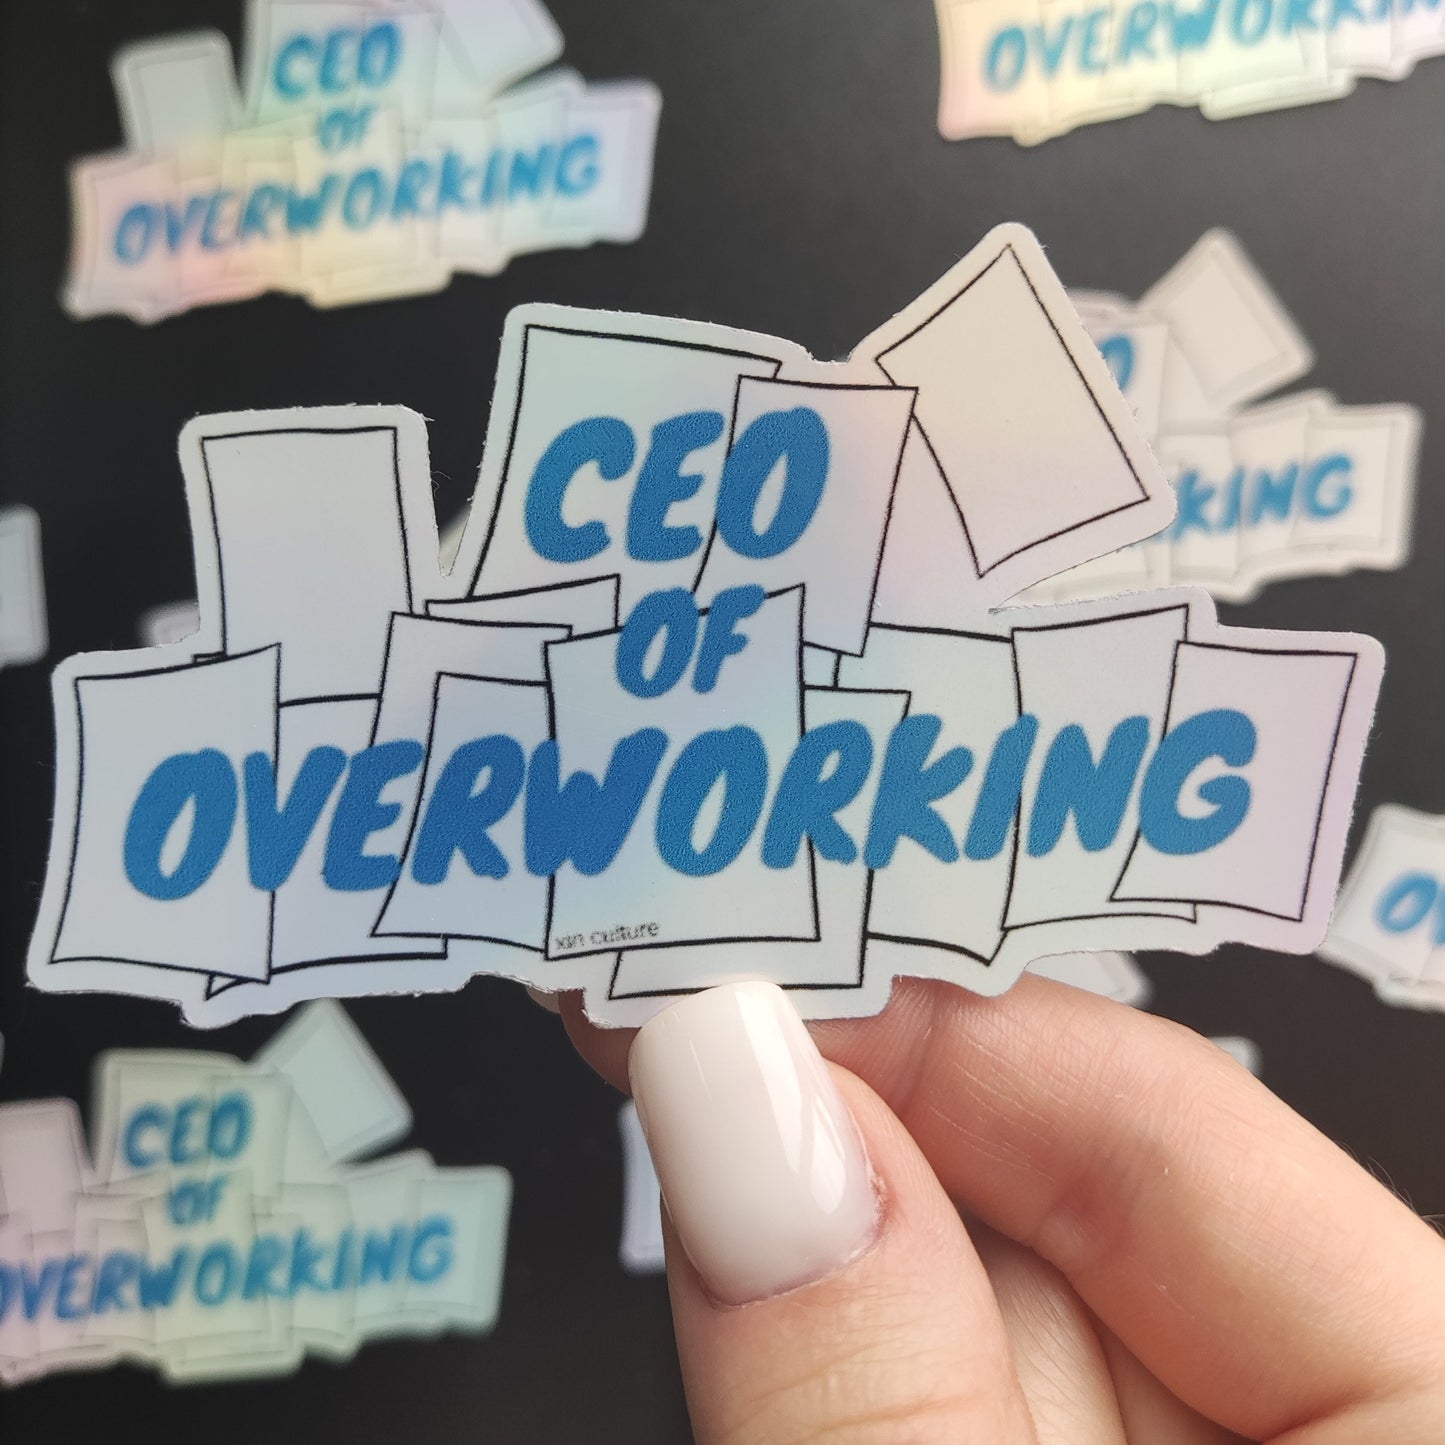 "CEO of OVERWORKING" sticker